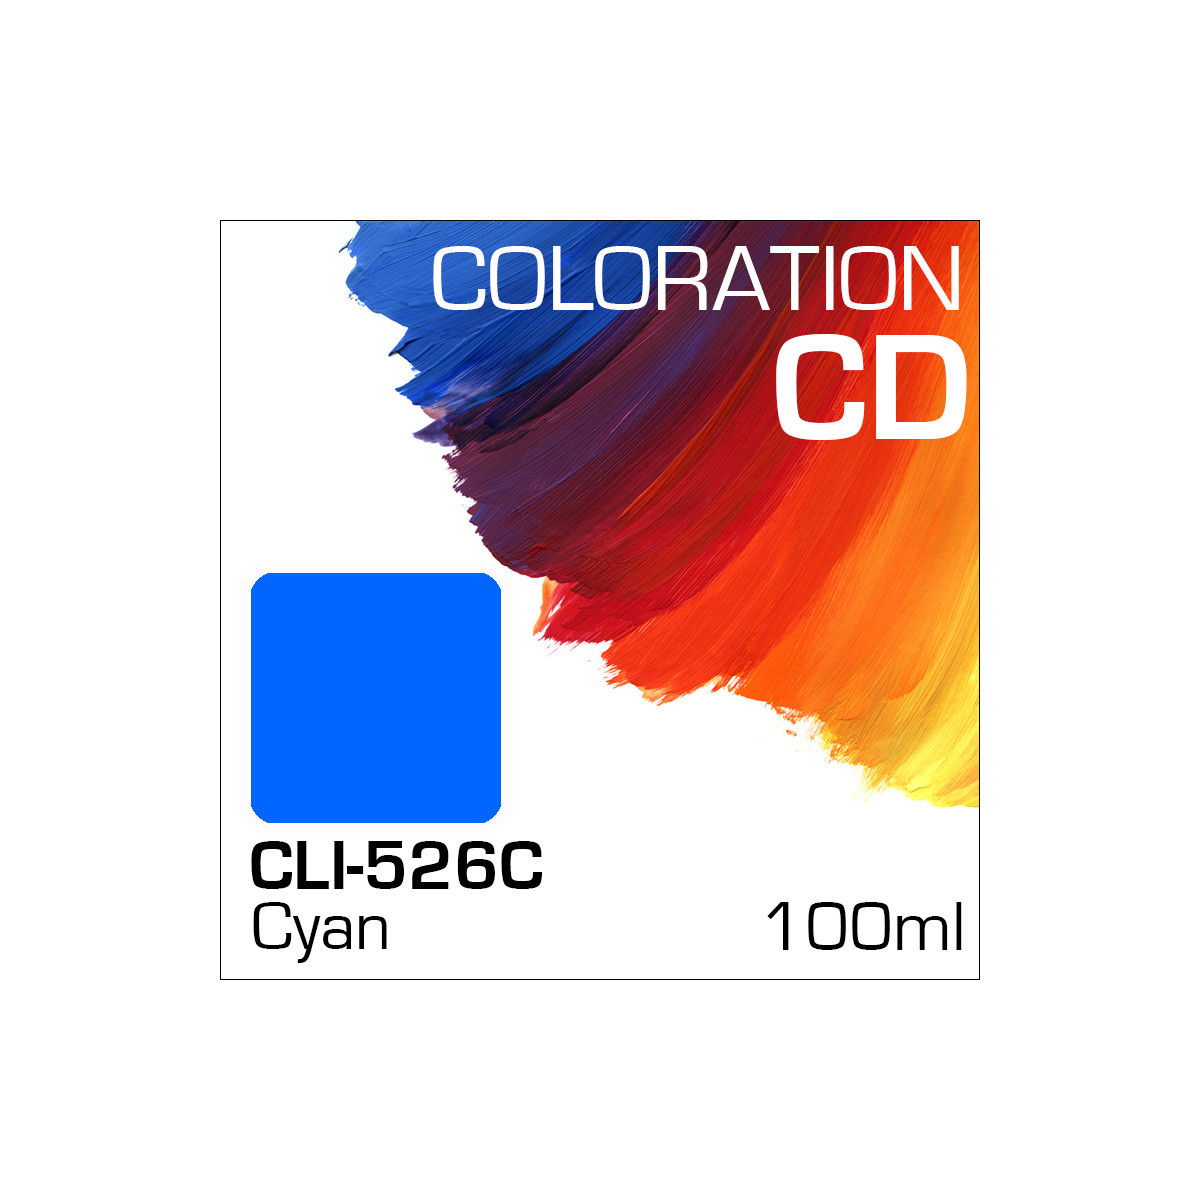 Coloration CD Flasche 100ml CLI-526C Cyan